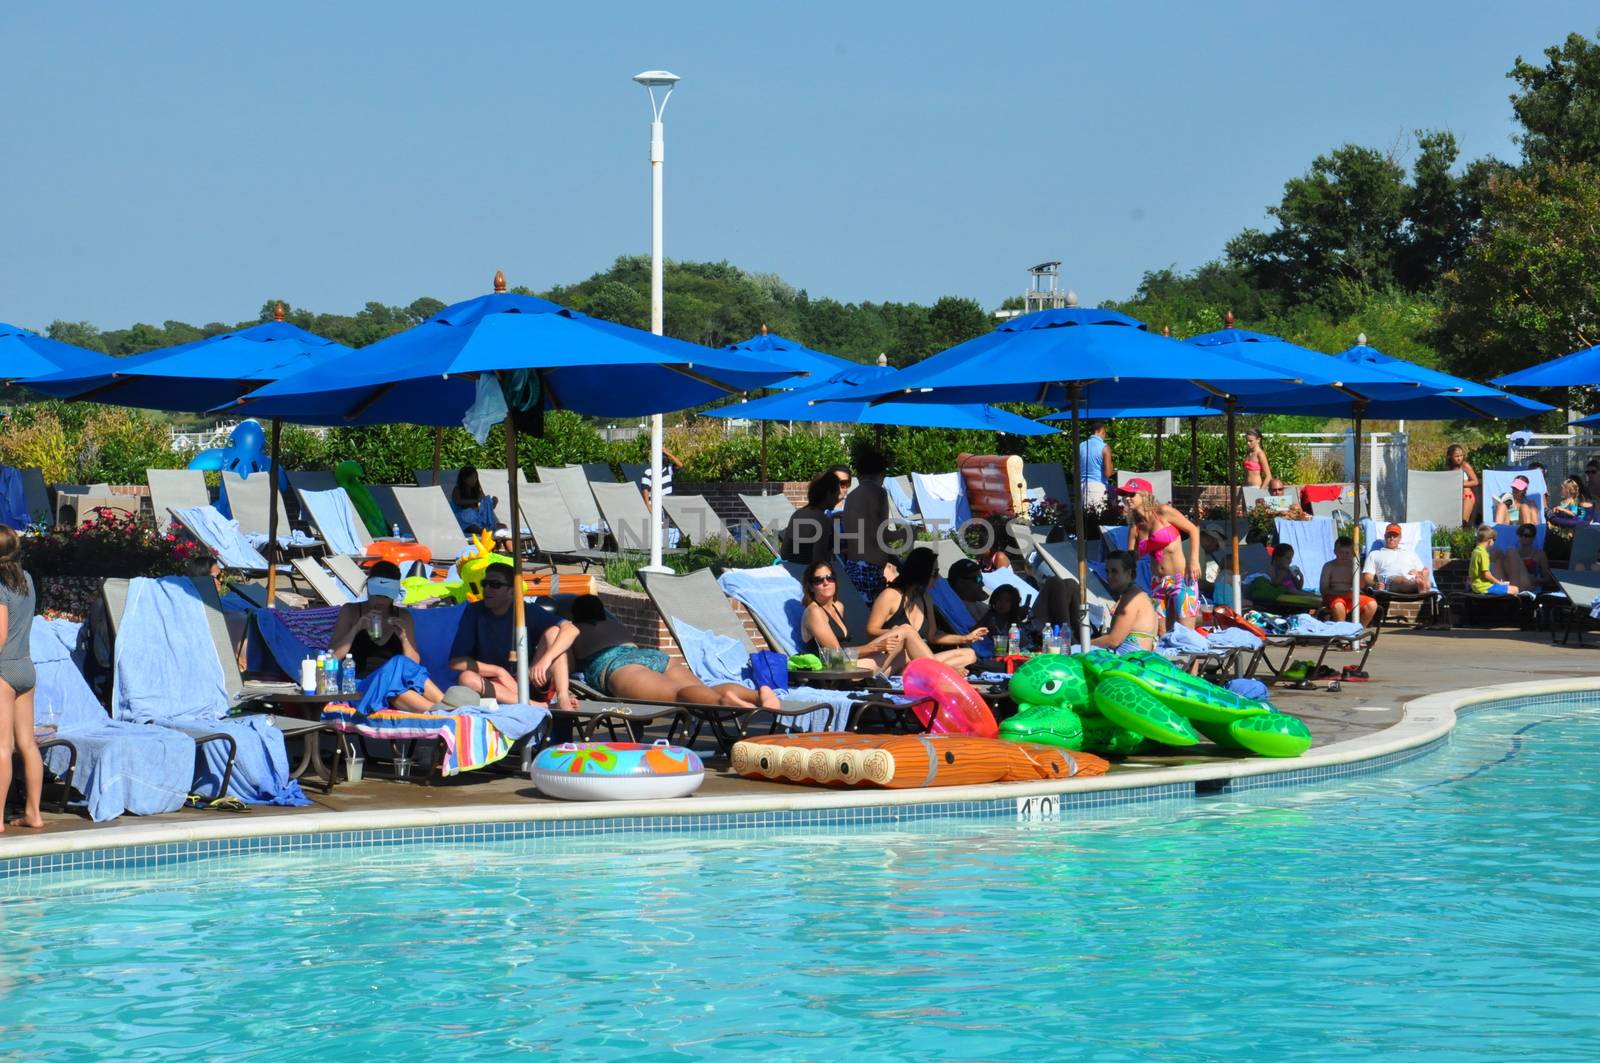 Poolside fun at the Hyatt Regency Chesapeake Bay resort in Cambridge, Maryland